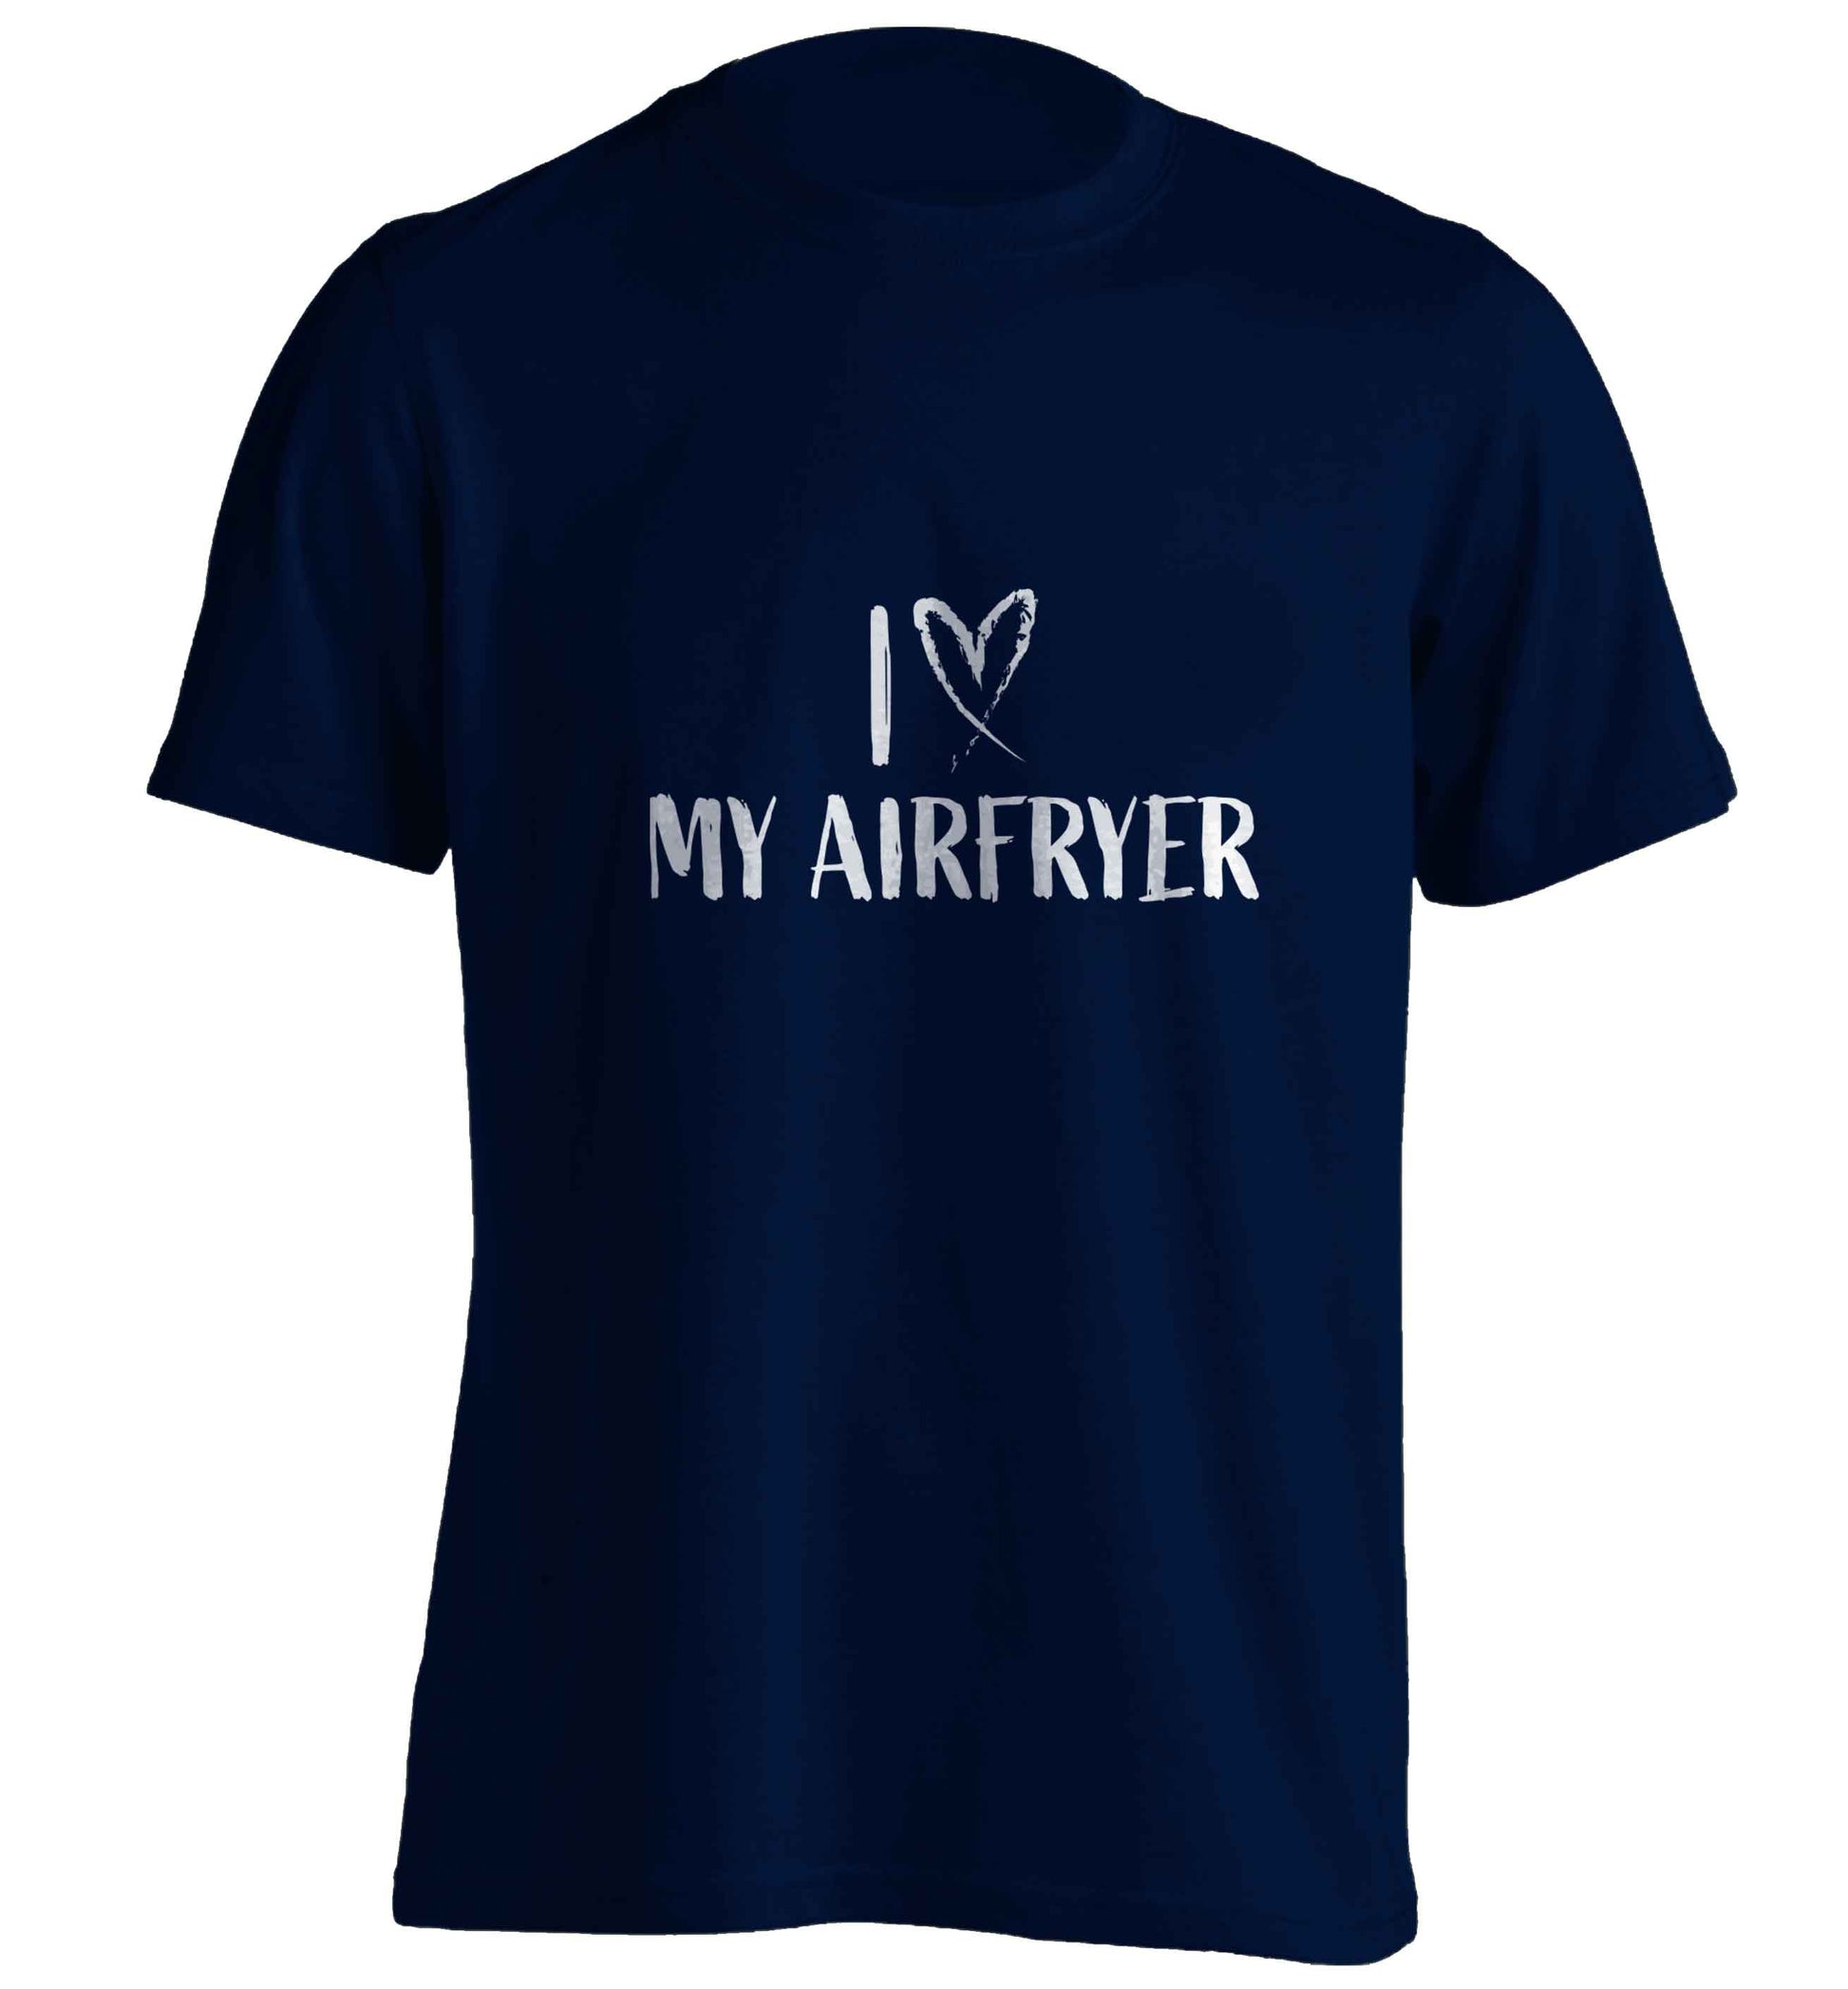 I love my airfryeradults unisex navy Tshirt 2XL